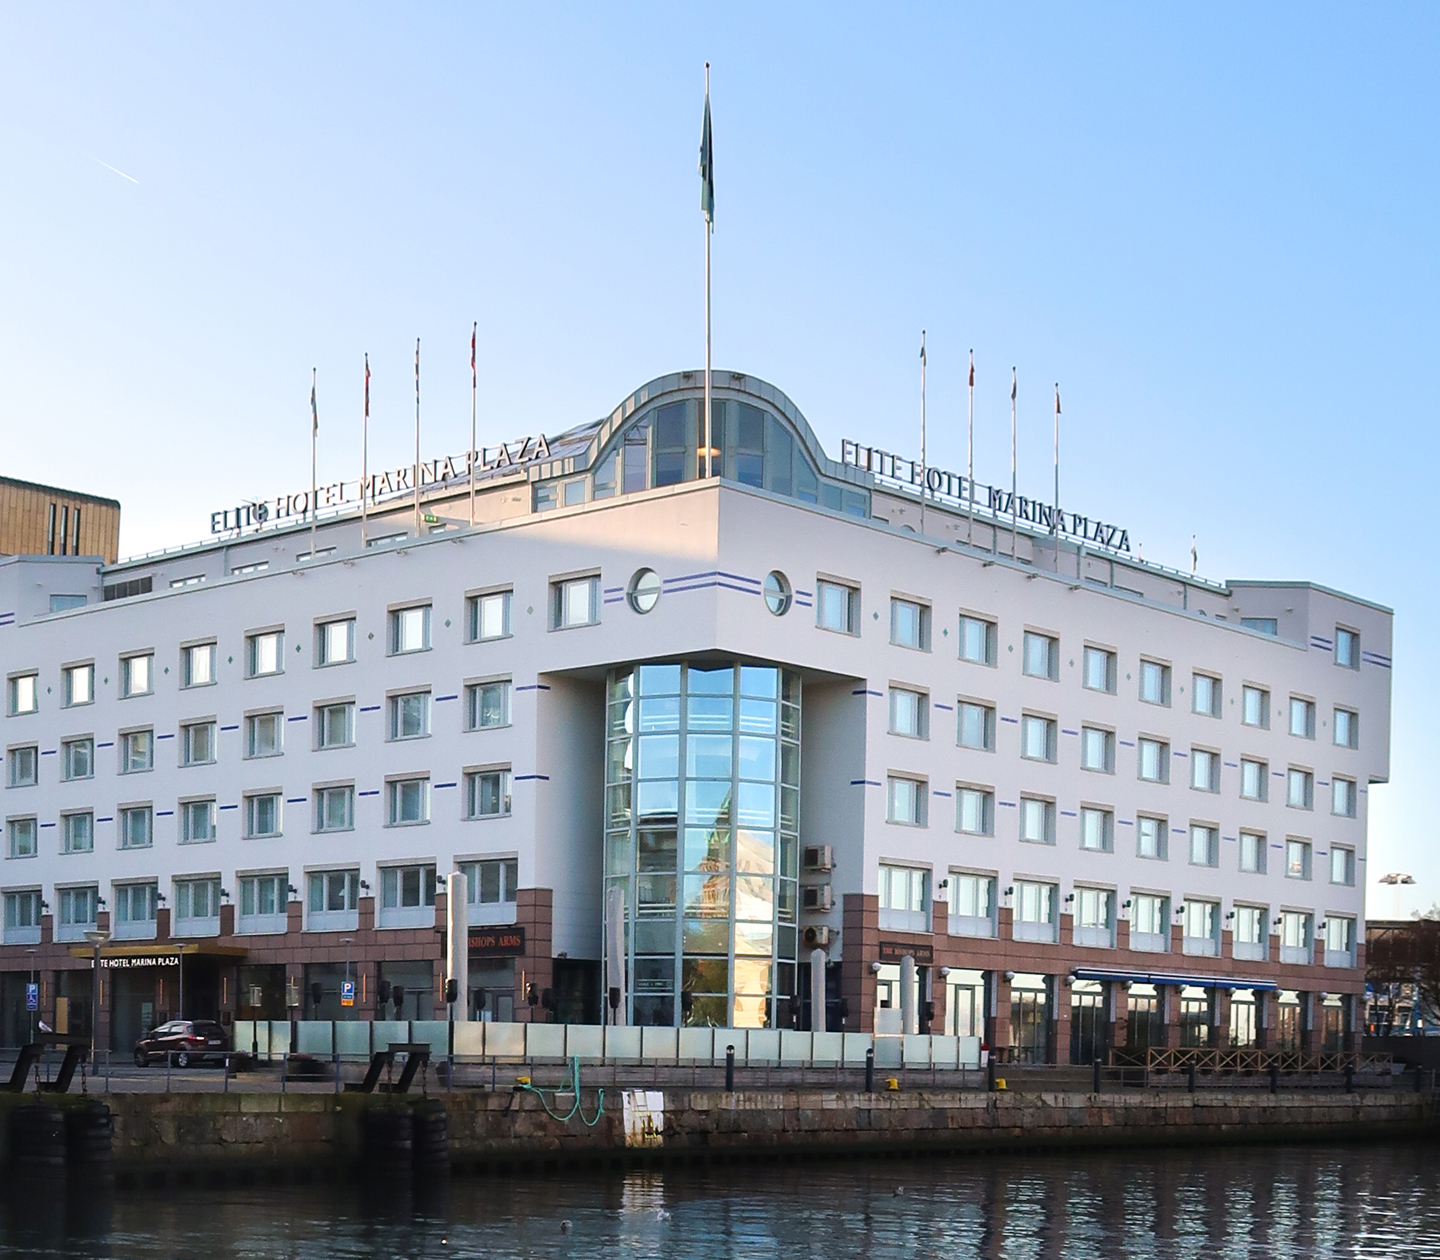 The facade of Elite Hotel Marina Plaza in Helsingborg